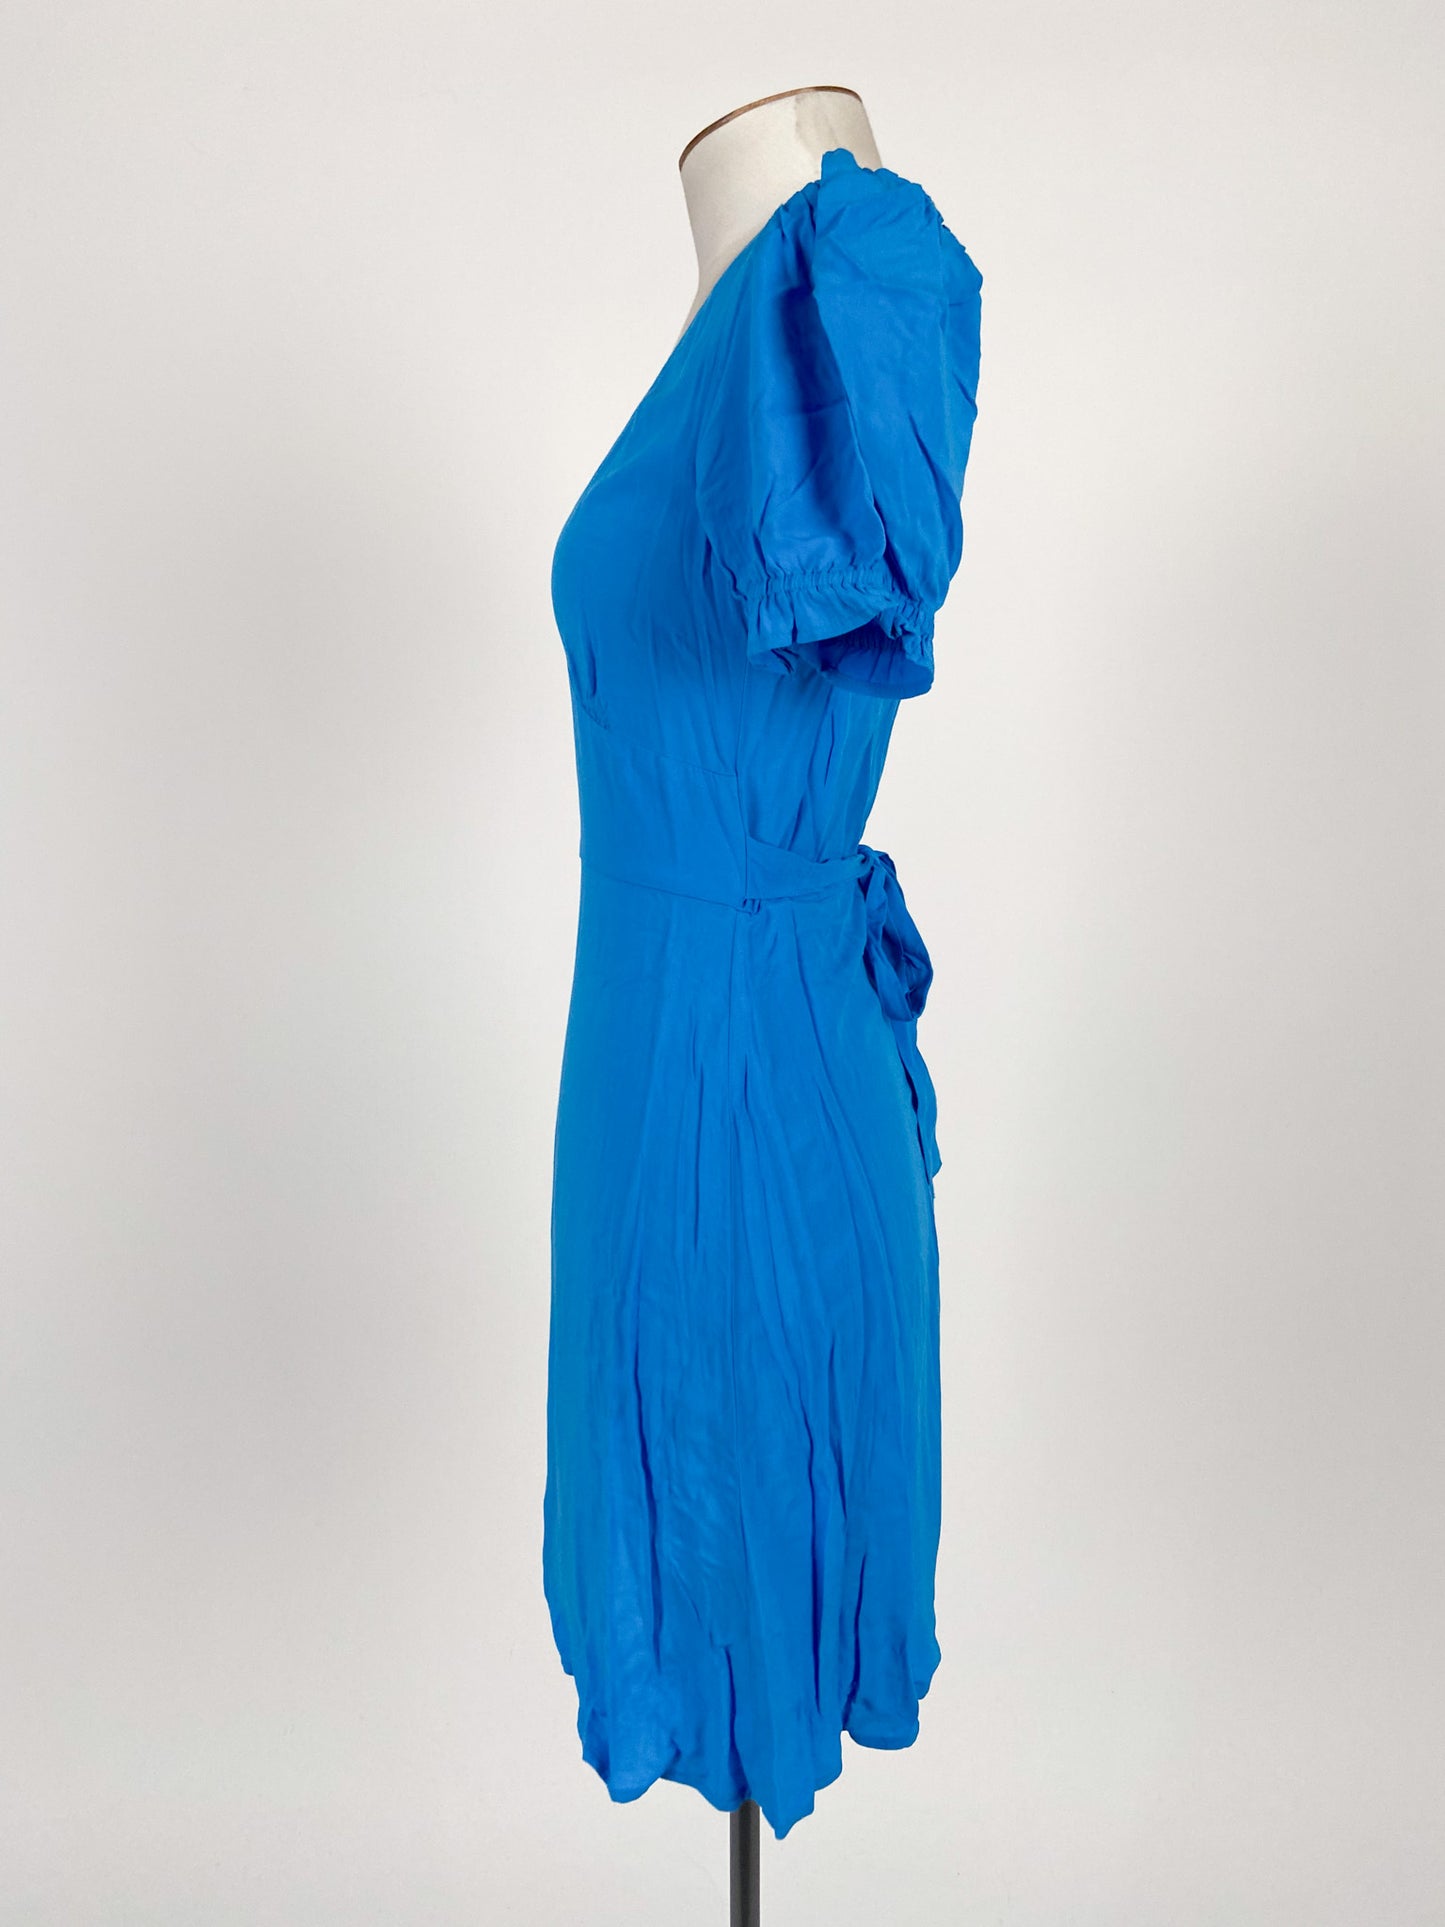 H&M | Blue Casual Dress | Size 4